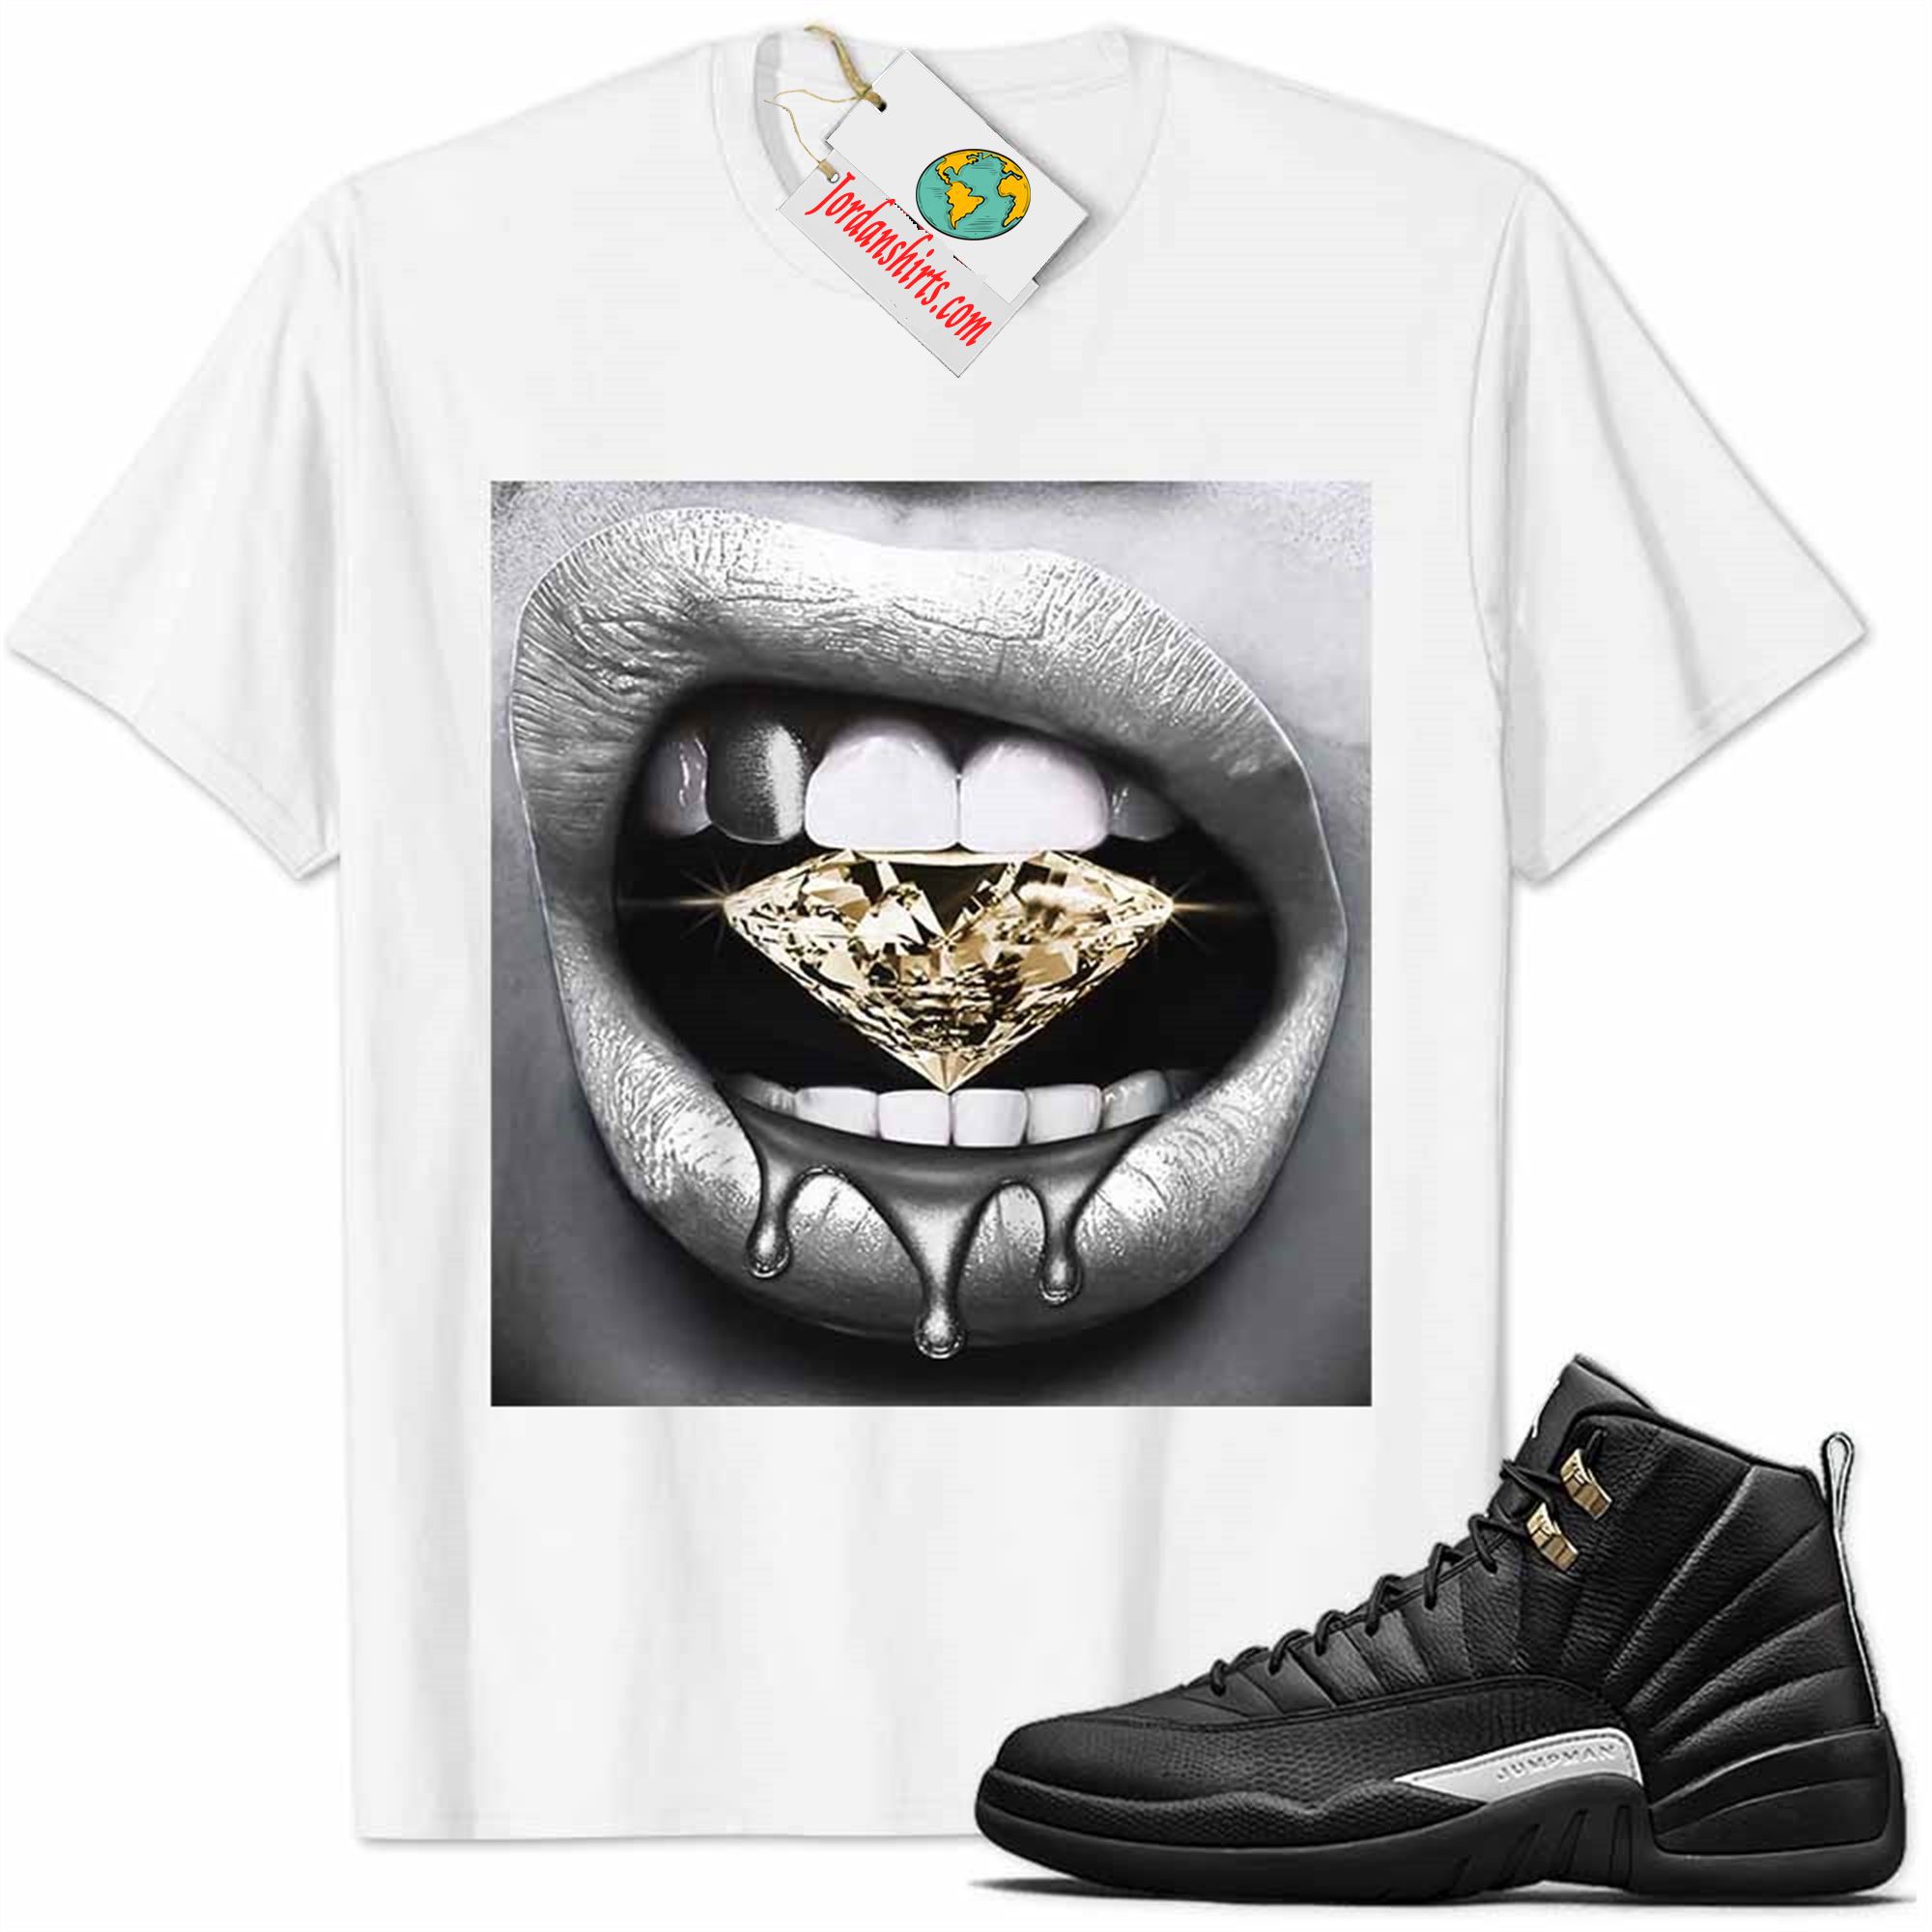 Jordan 12 Shirt, Jordan 12 Master Shirt Sexy Lip Bite Diamond Dripping White Plus Size Up To 5xl